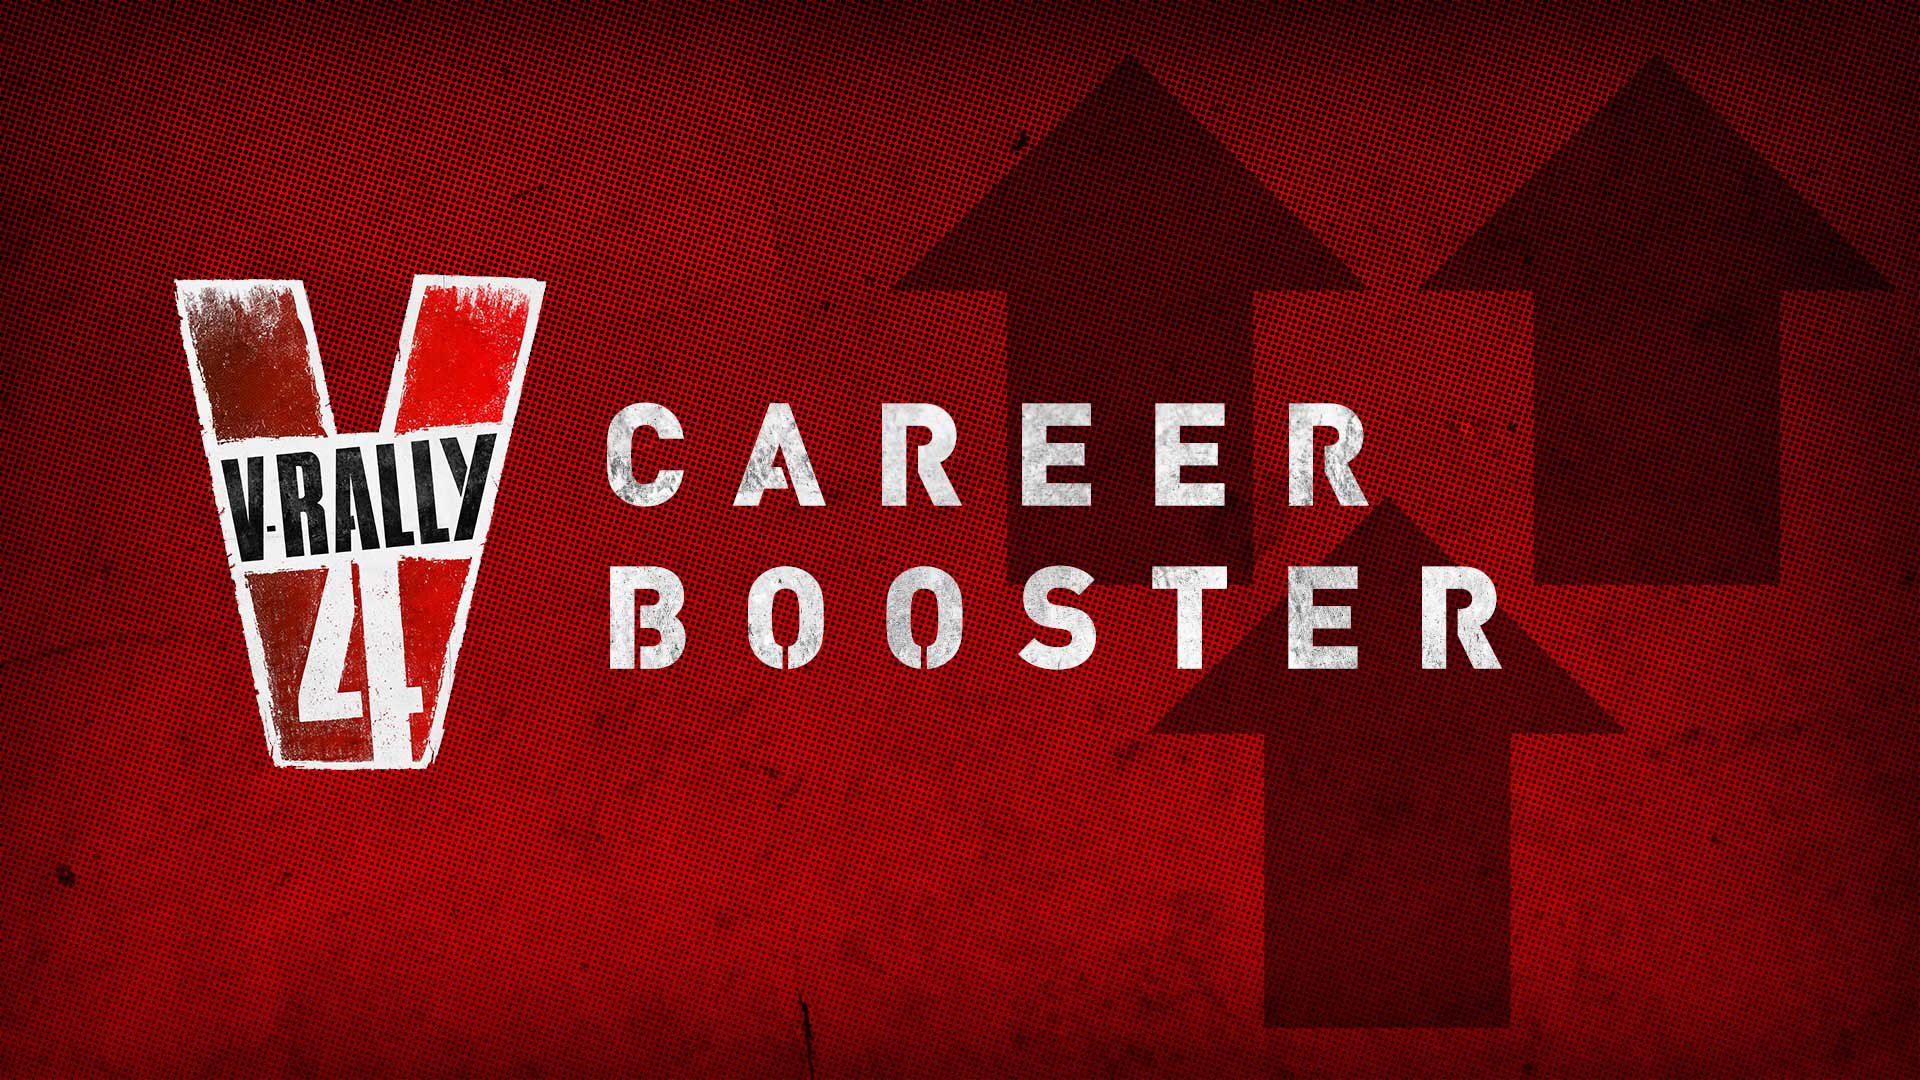 V-Rally 4: Career Booster